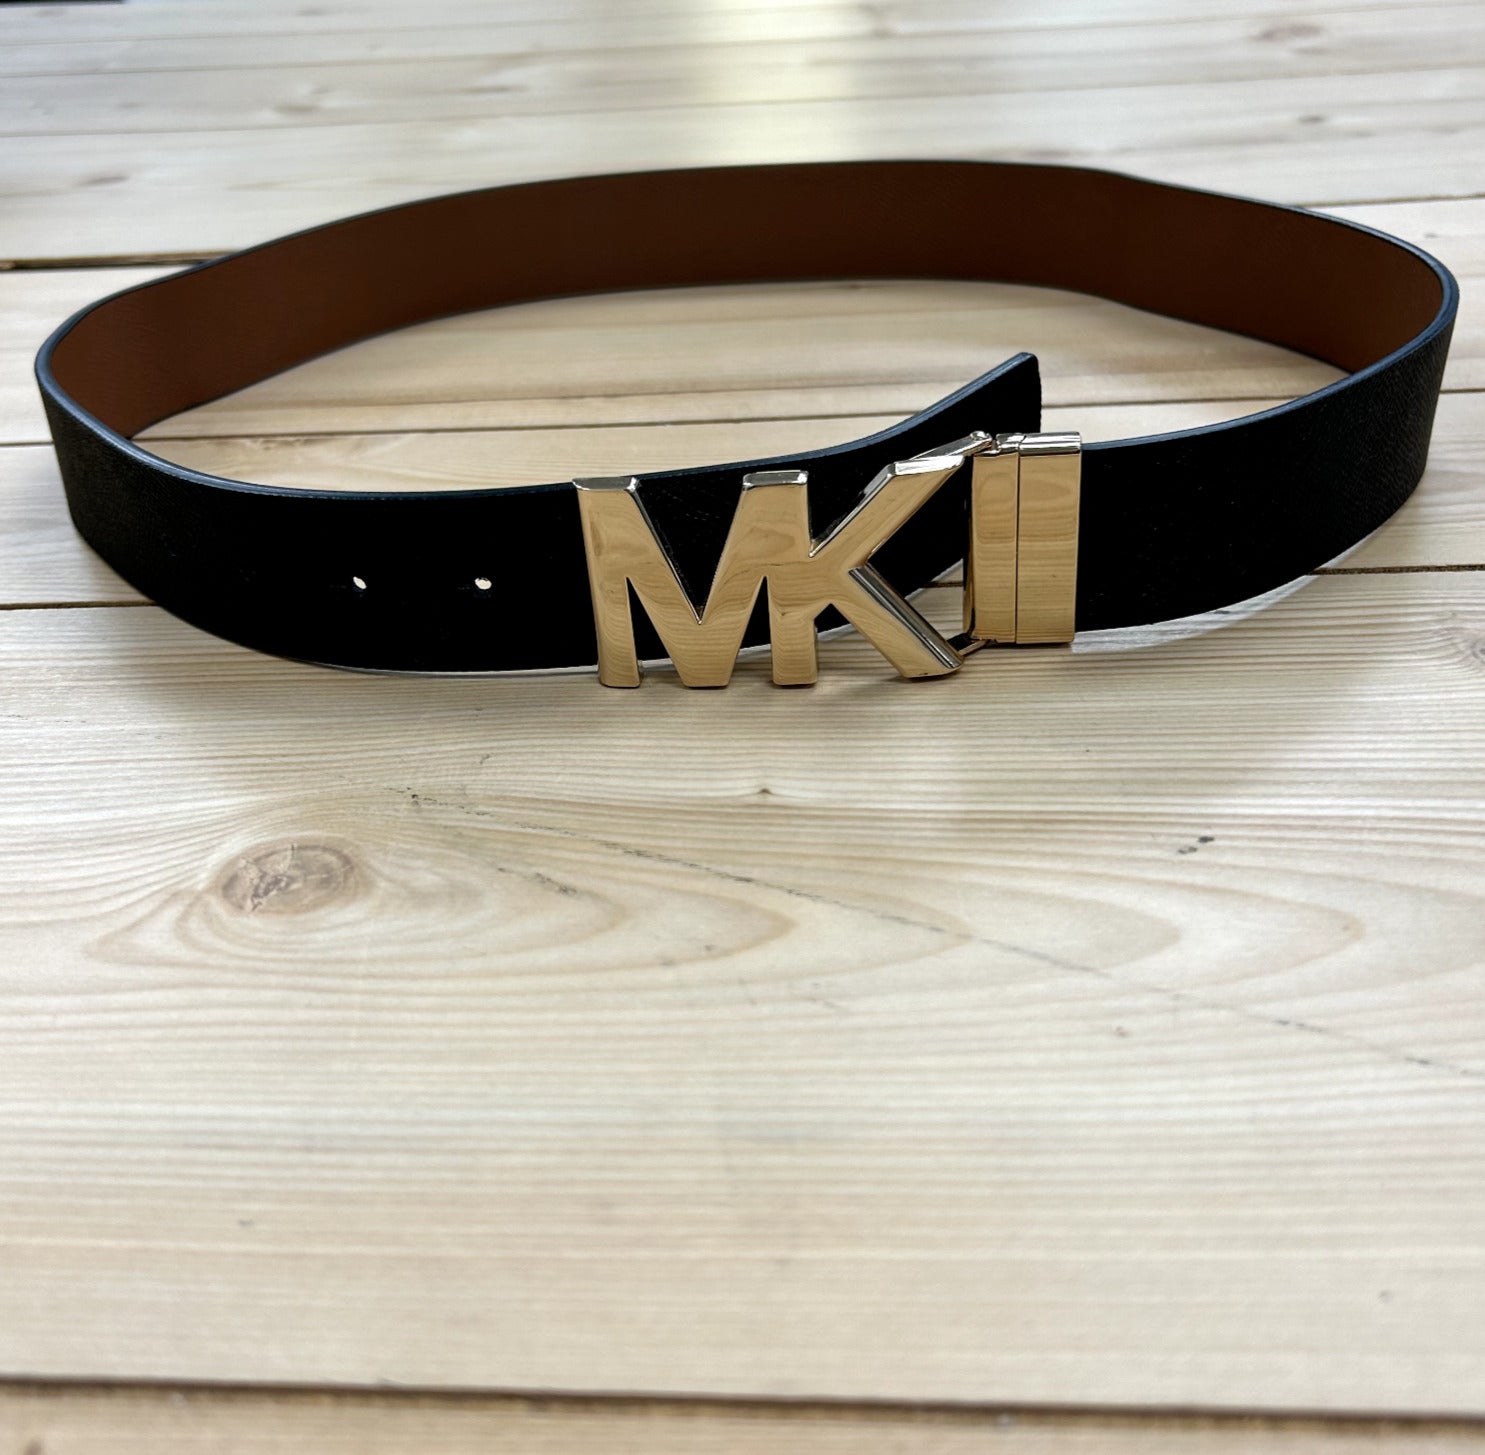 MICHAEL KORS Reversible Belt 2 Sides Black & Tan MK Logo Gold Buckle 38" Length